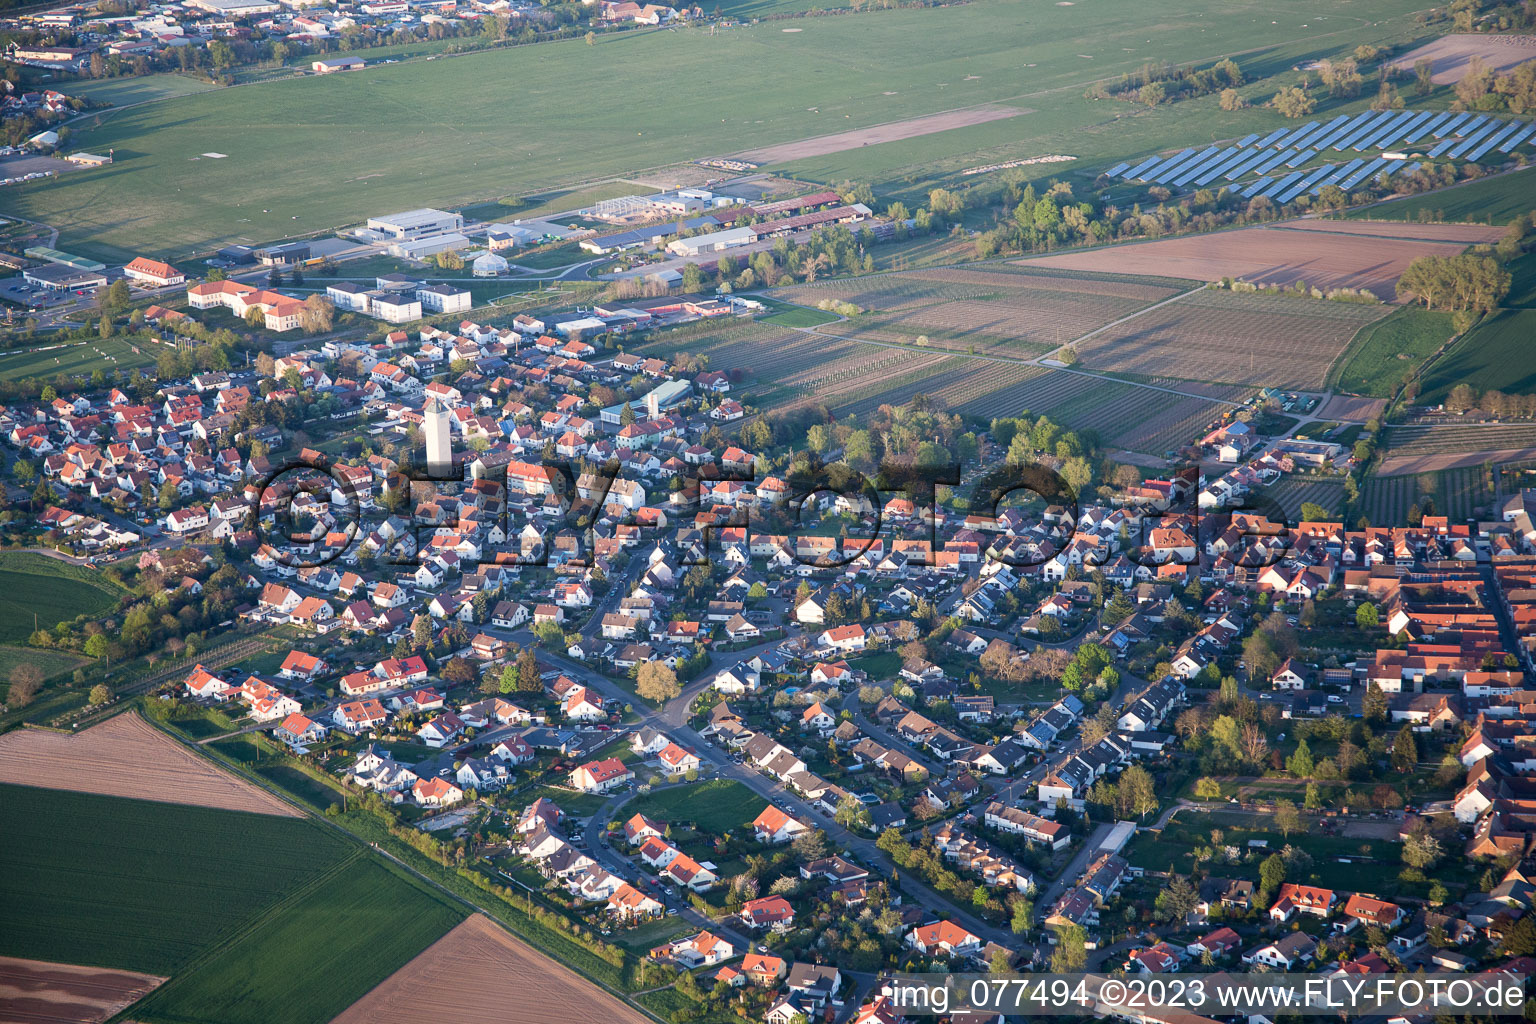 Aerial view of District Lachen in Neustadt an der Weinstraße in the state Rhineland-Palatinate, Germany